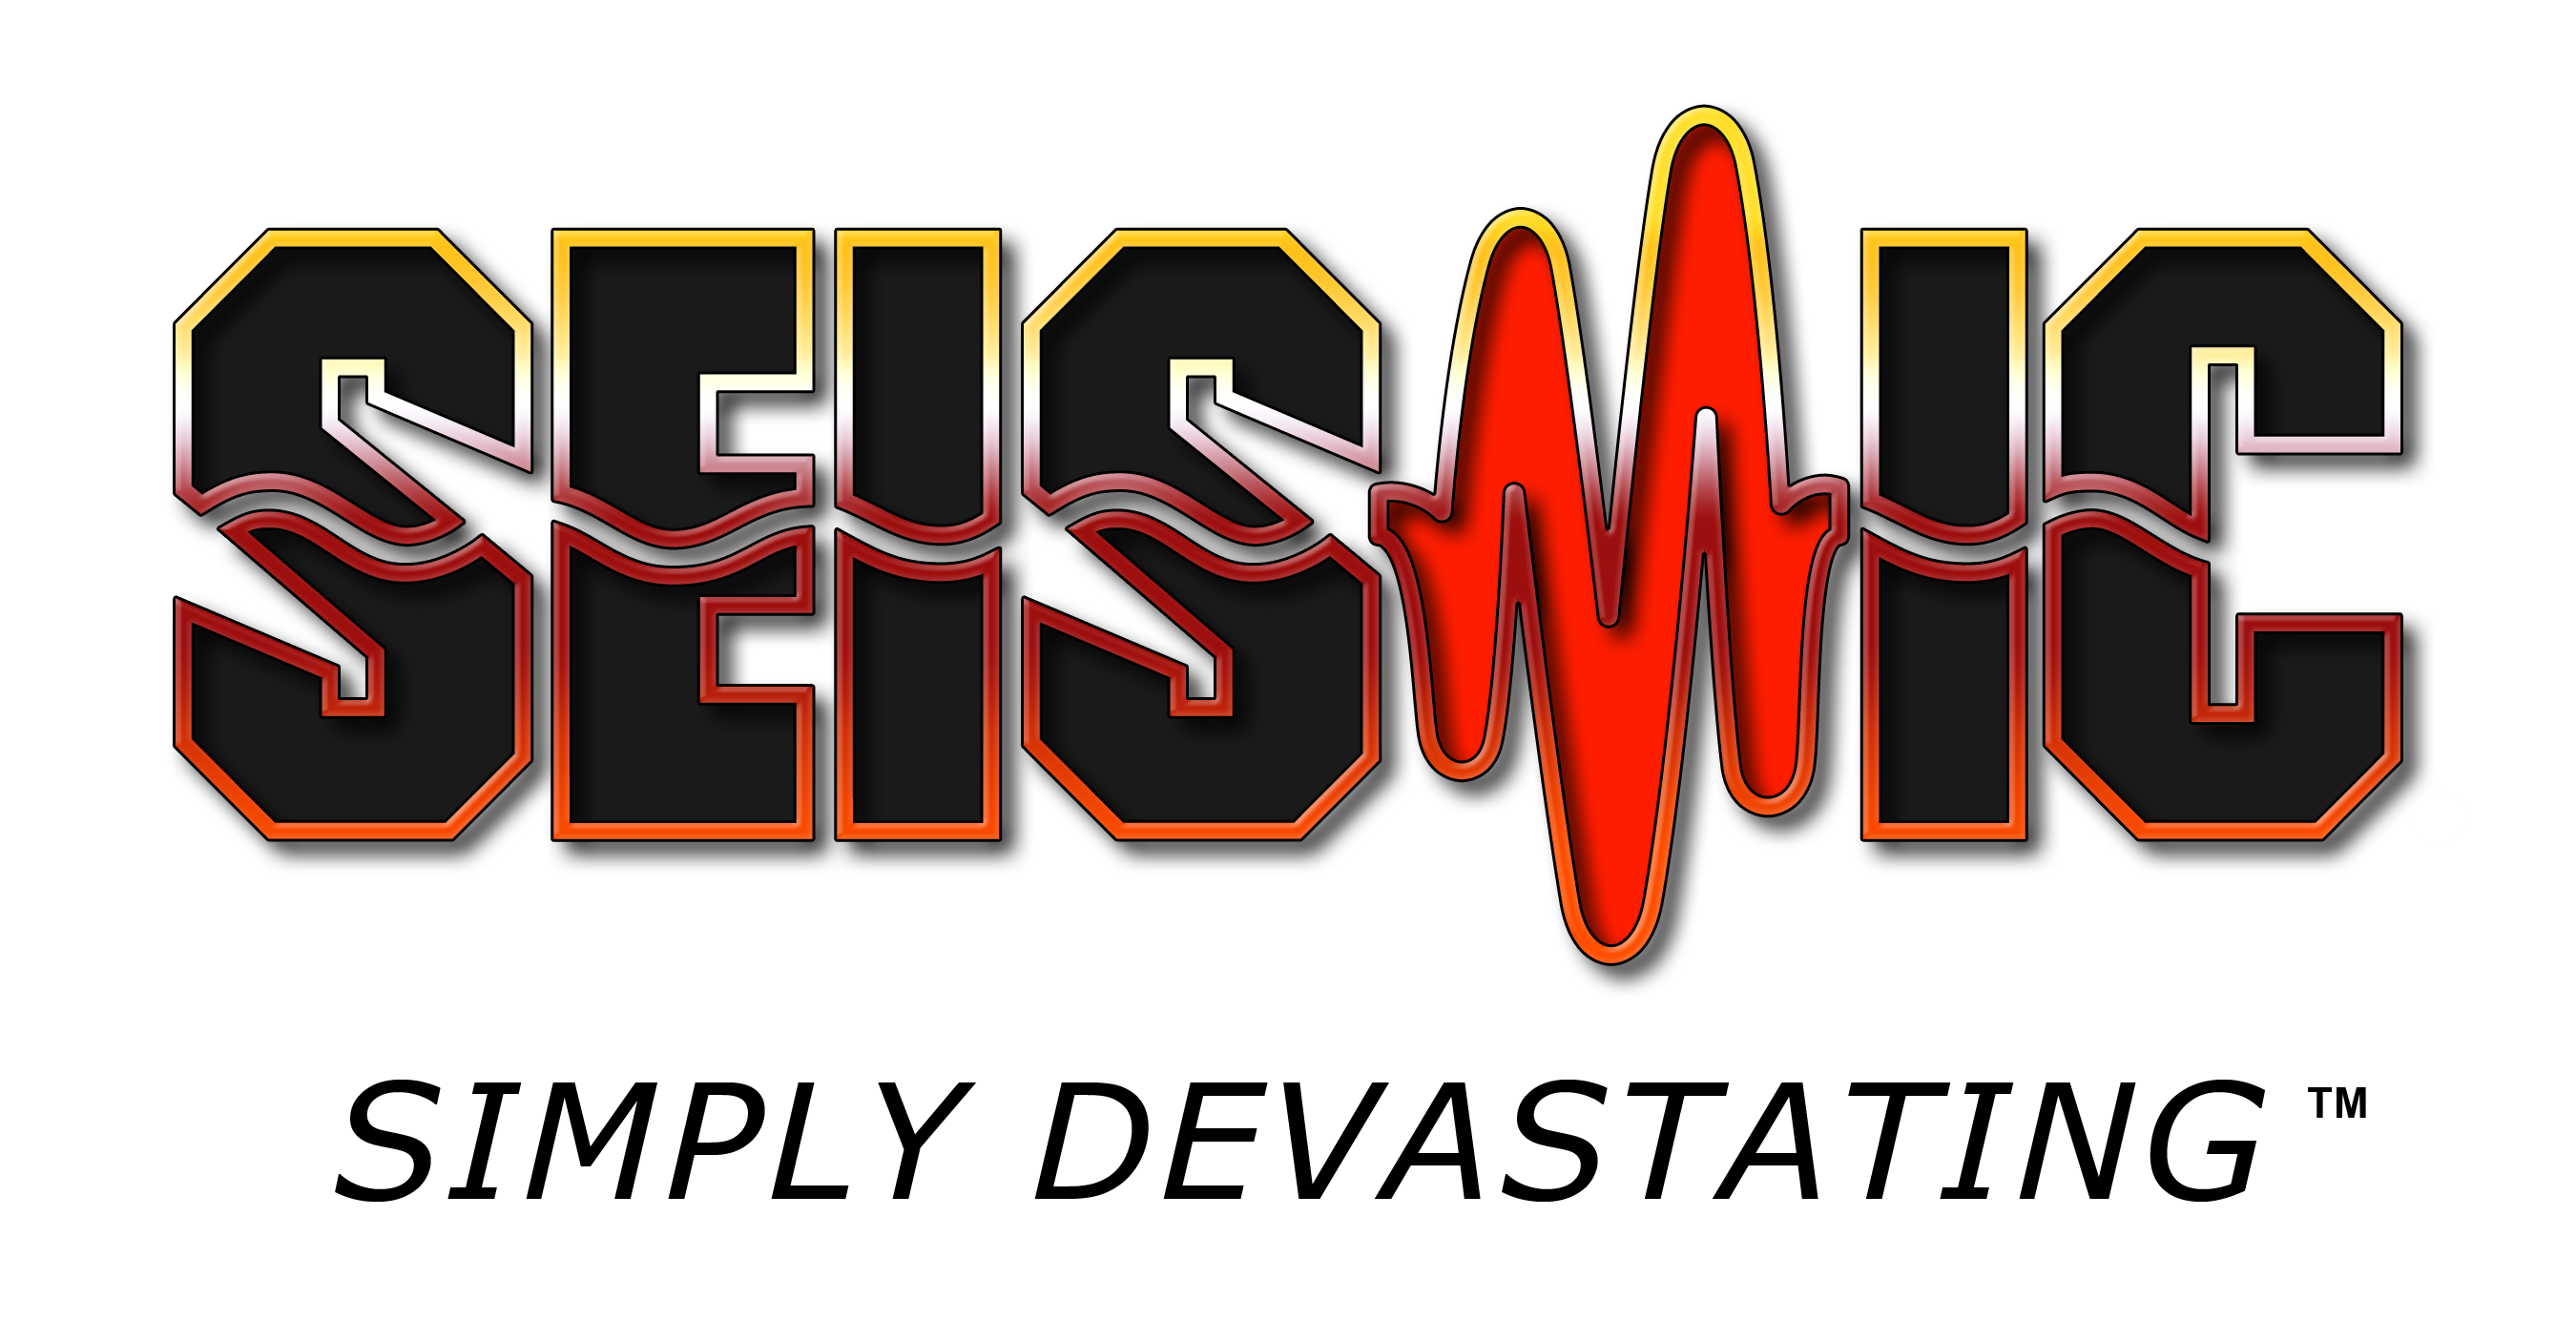 Seismic Logo